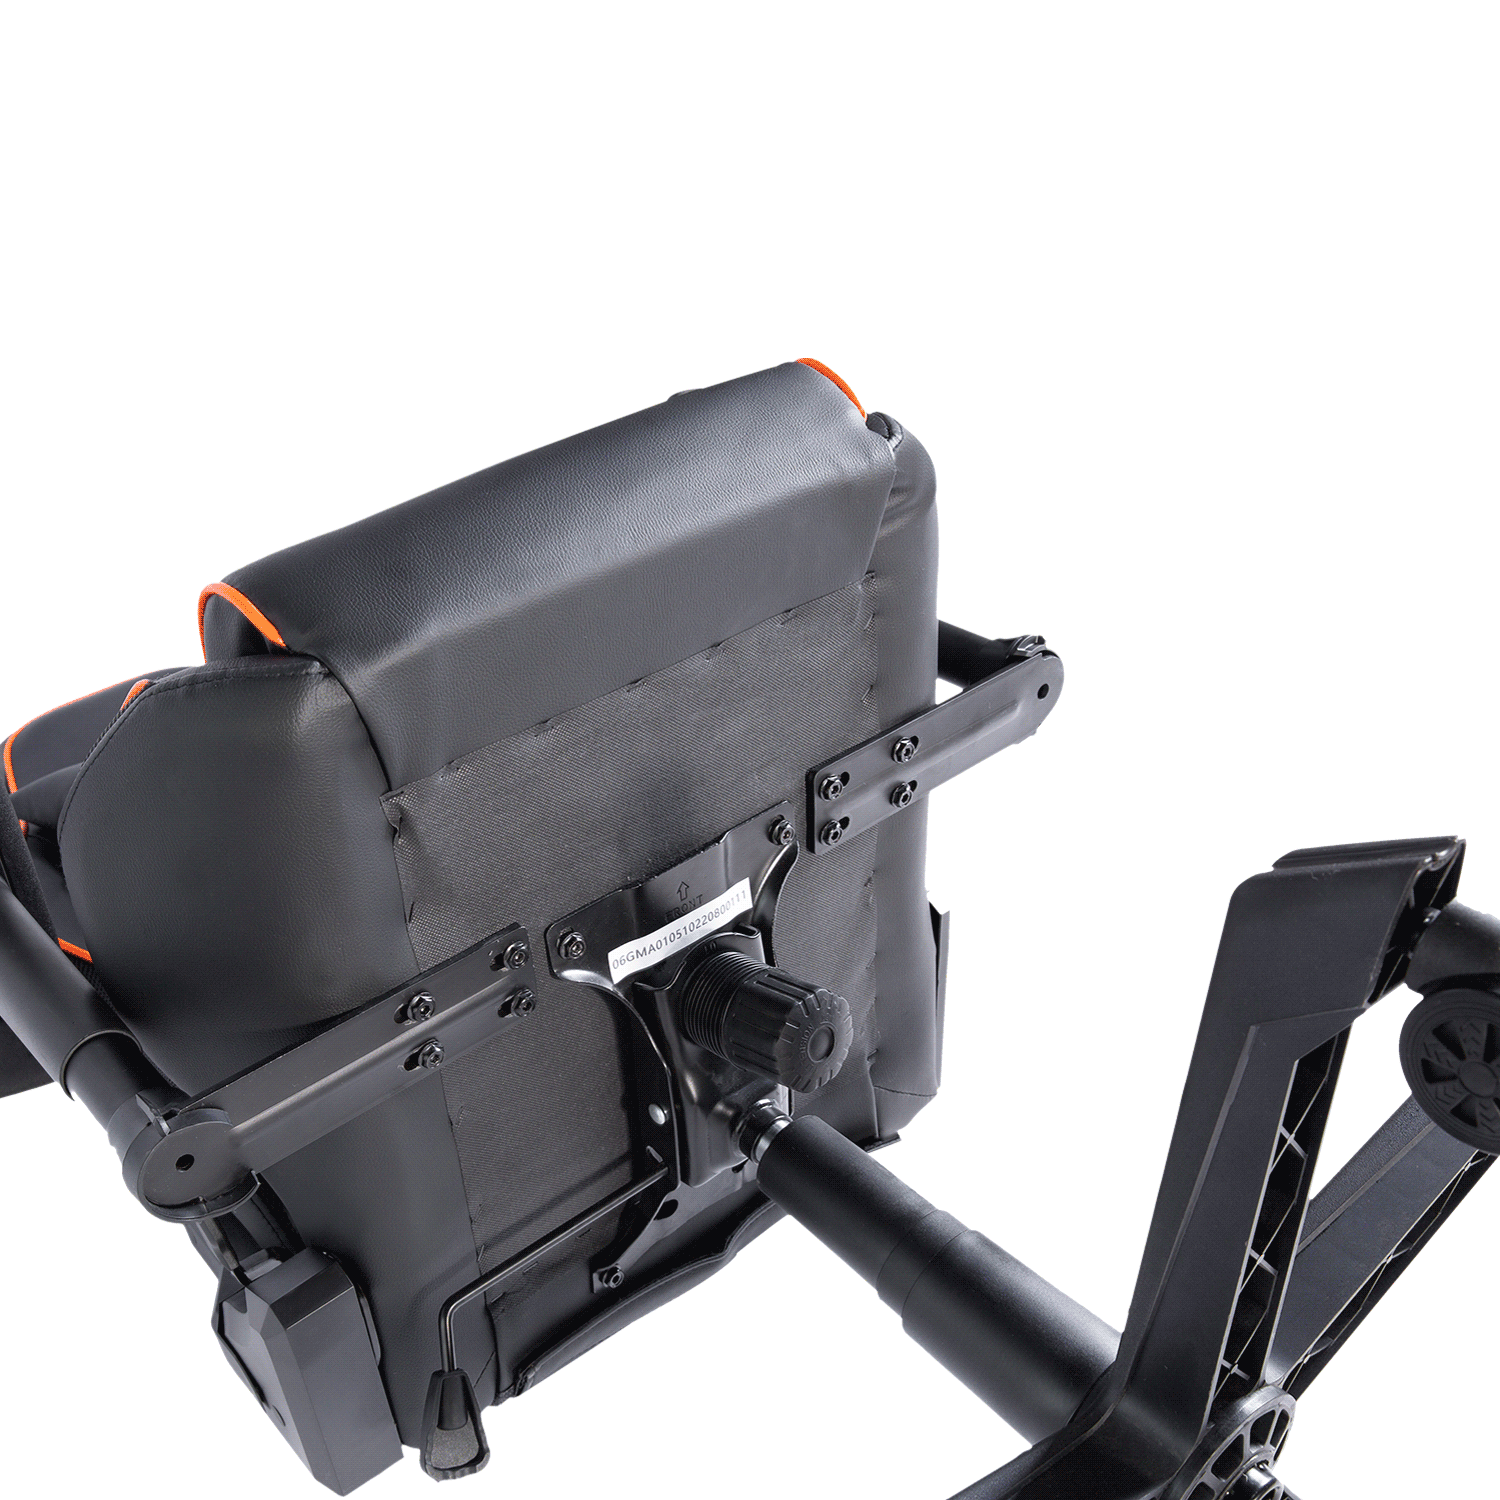 Cadeira Gamer Darkflash RC-650 RGB - Preto / Laranja